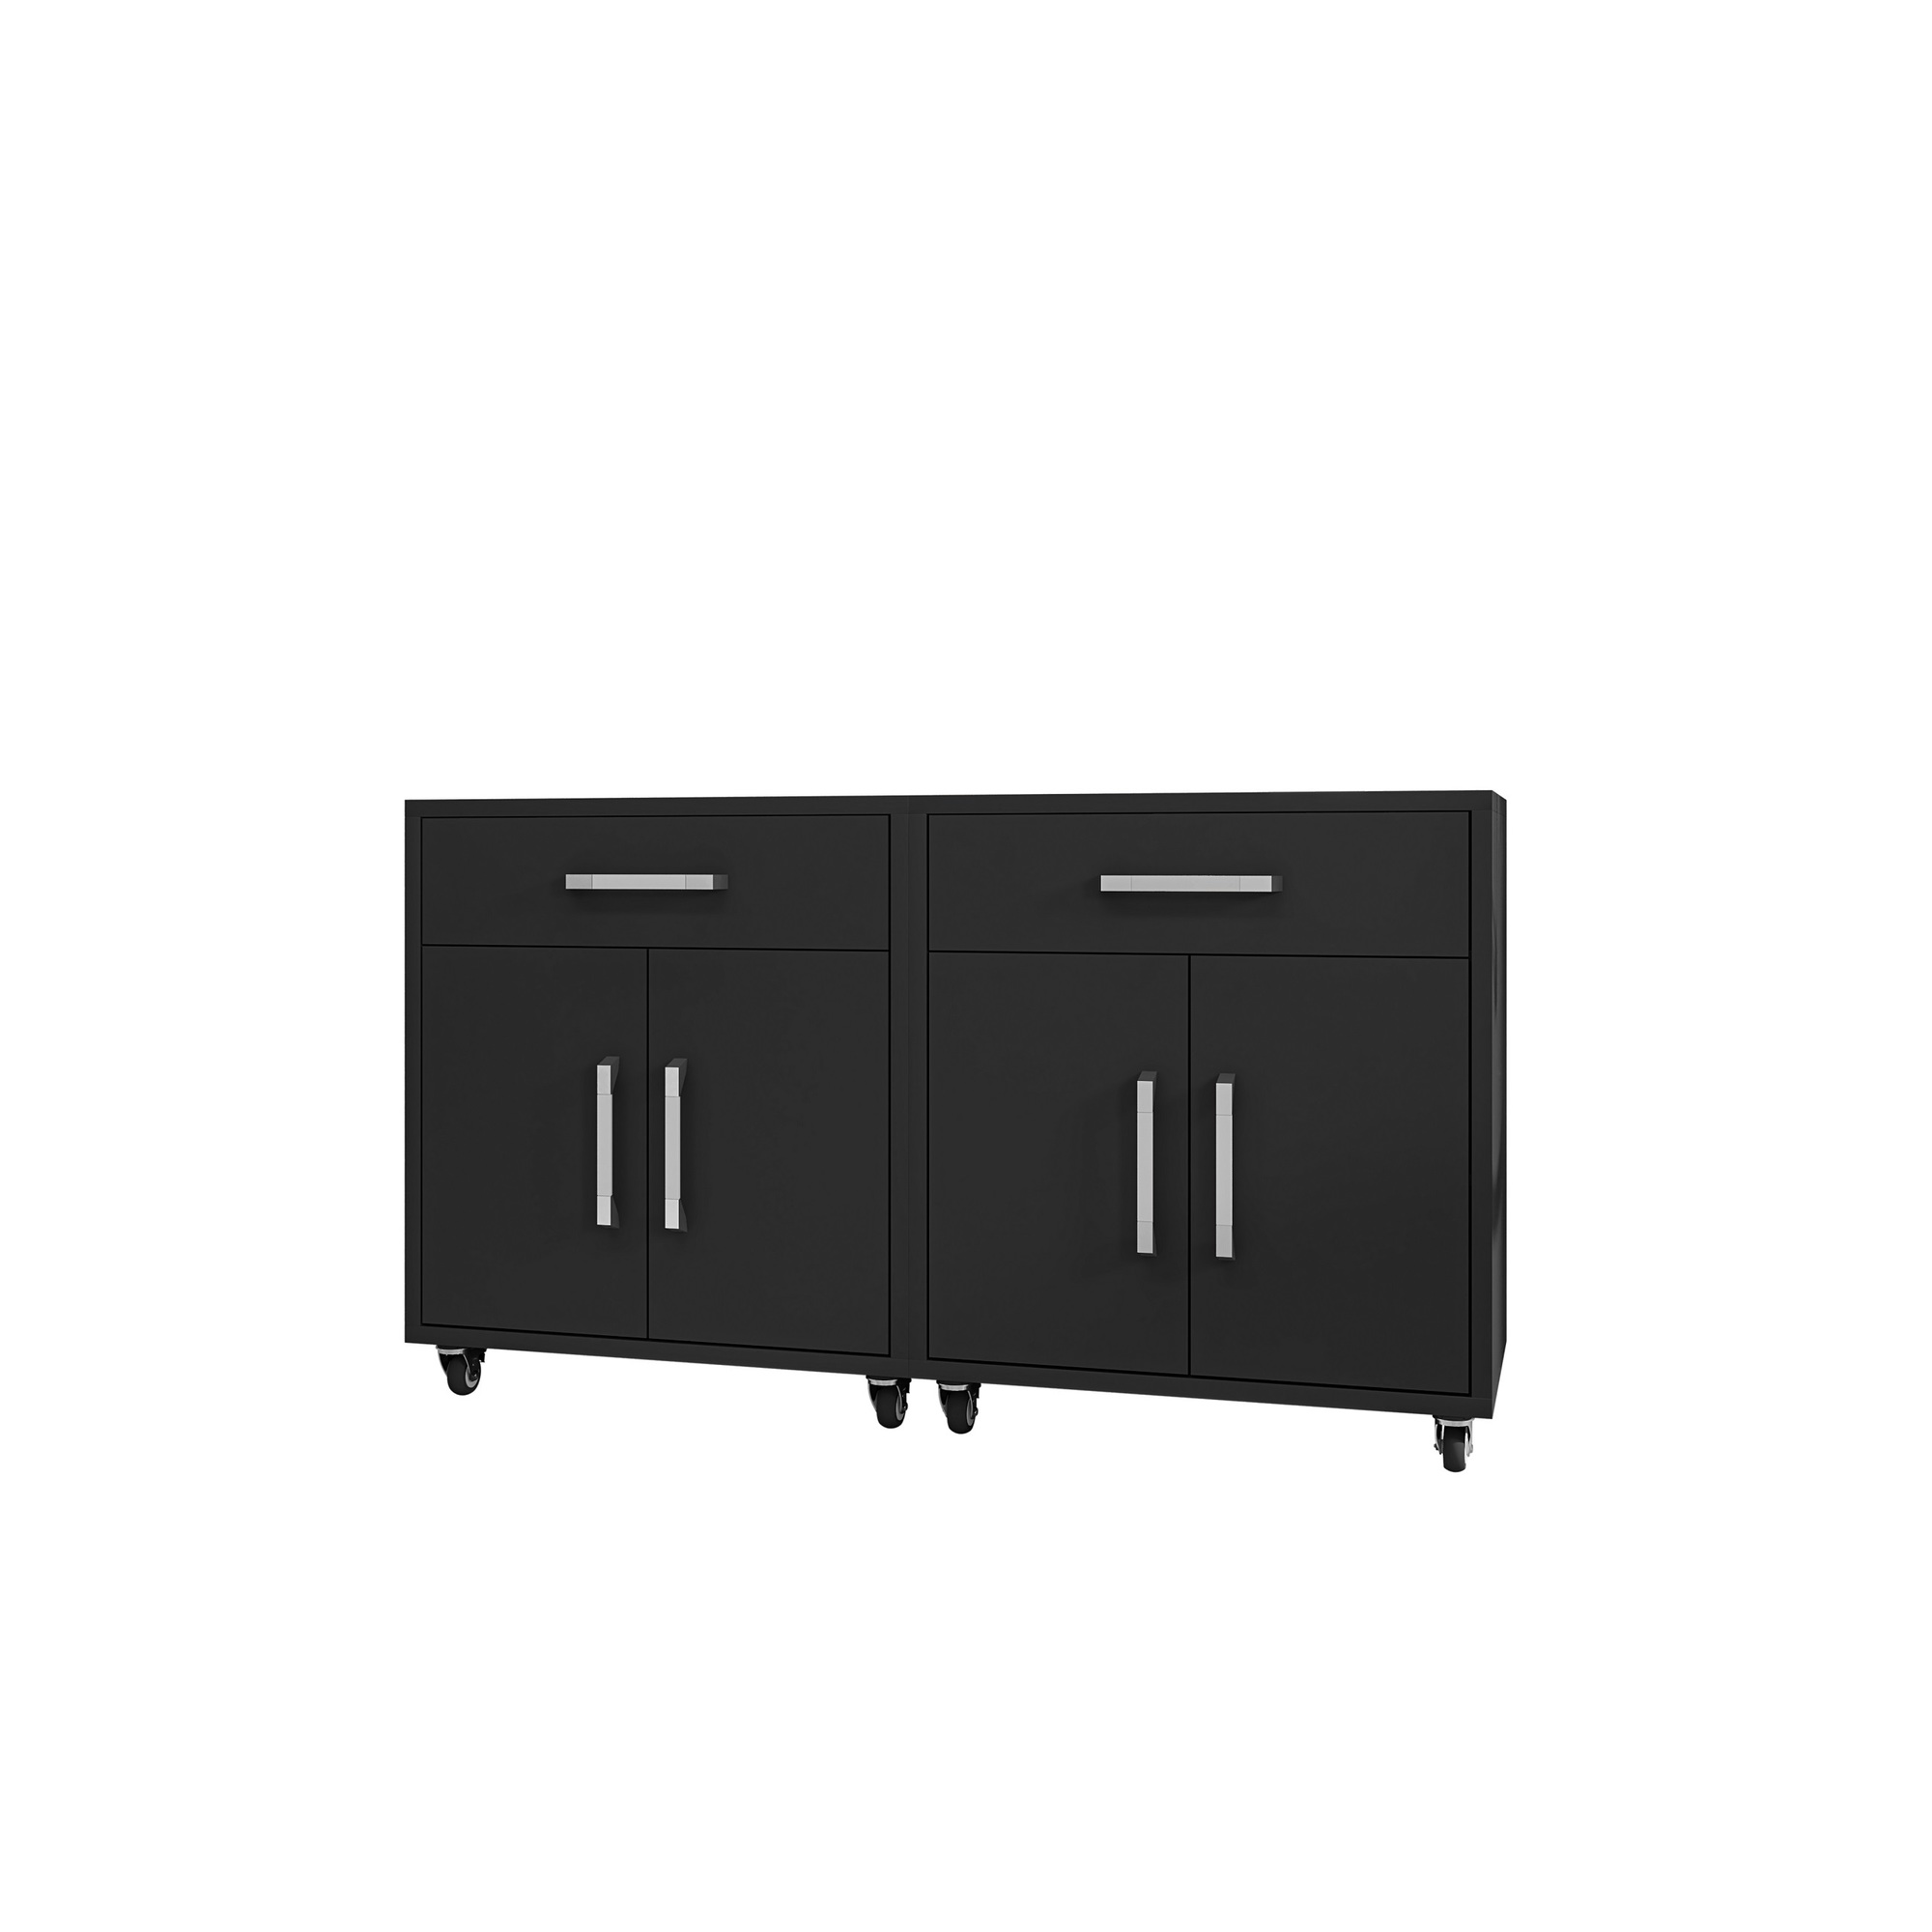 Manhattan Comfort, Eiffel Mobile Garage Cabinet, Matte Black Set of 2 Height 34.41 in, Width 56.7 in, Color Black, Model 2-252BMC